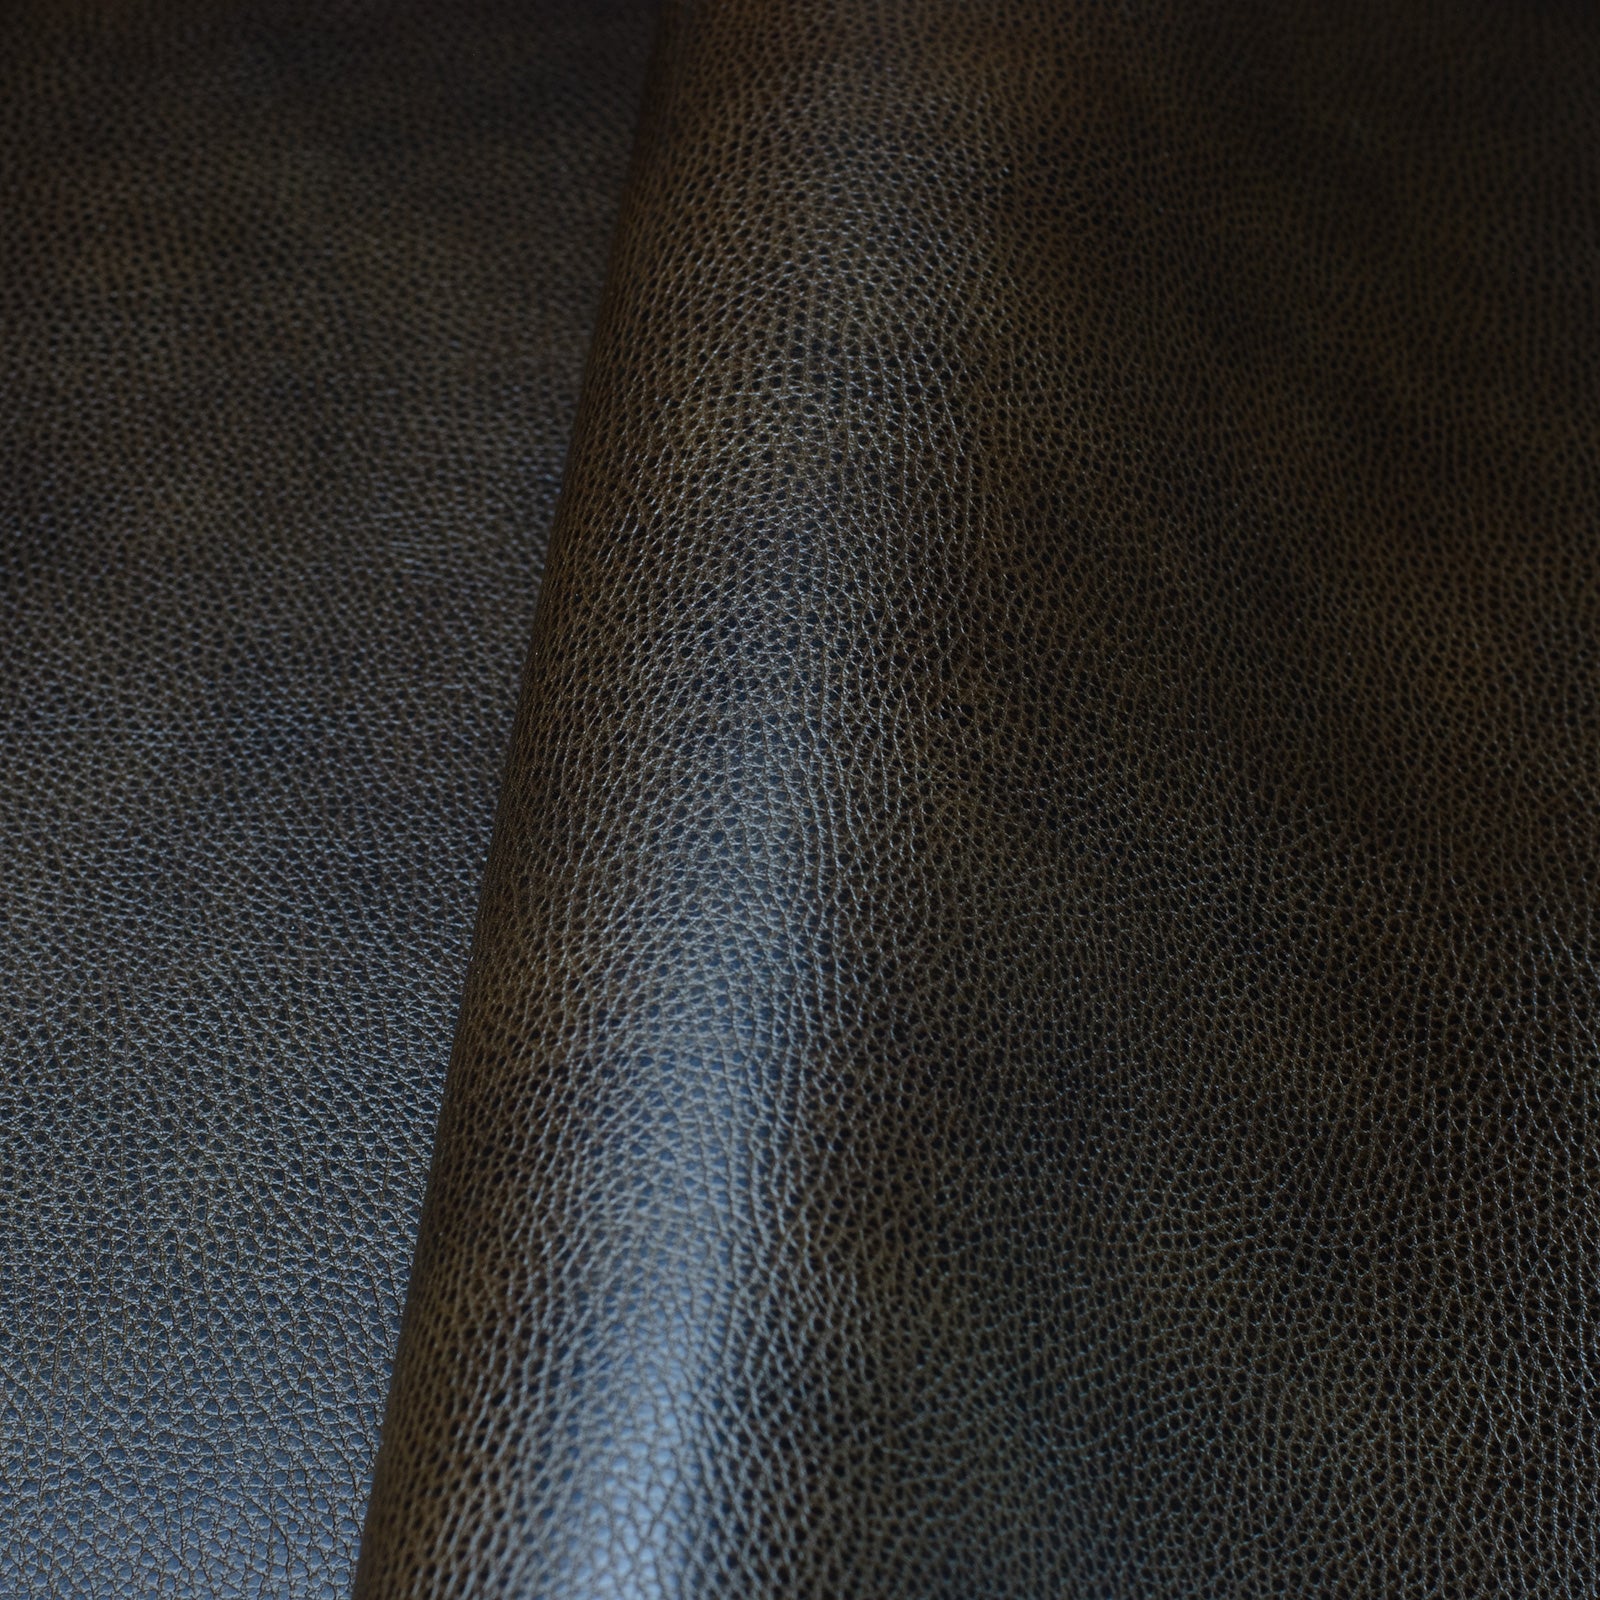 Conceria Walpier Dollaro Chocolate Leather Shoulders